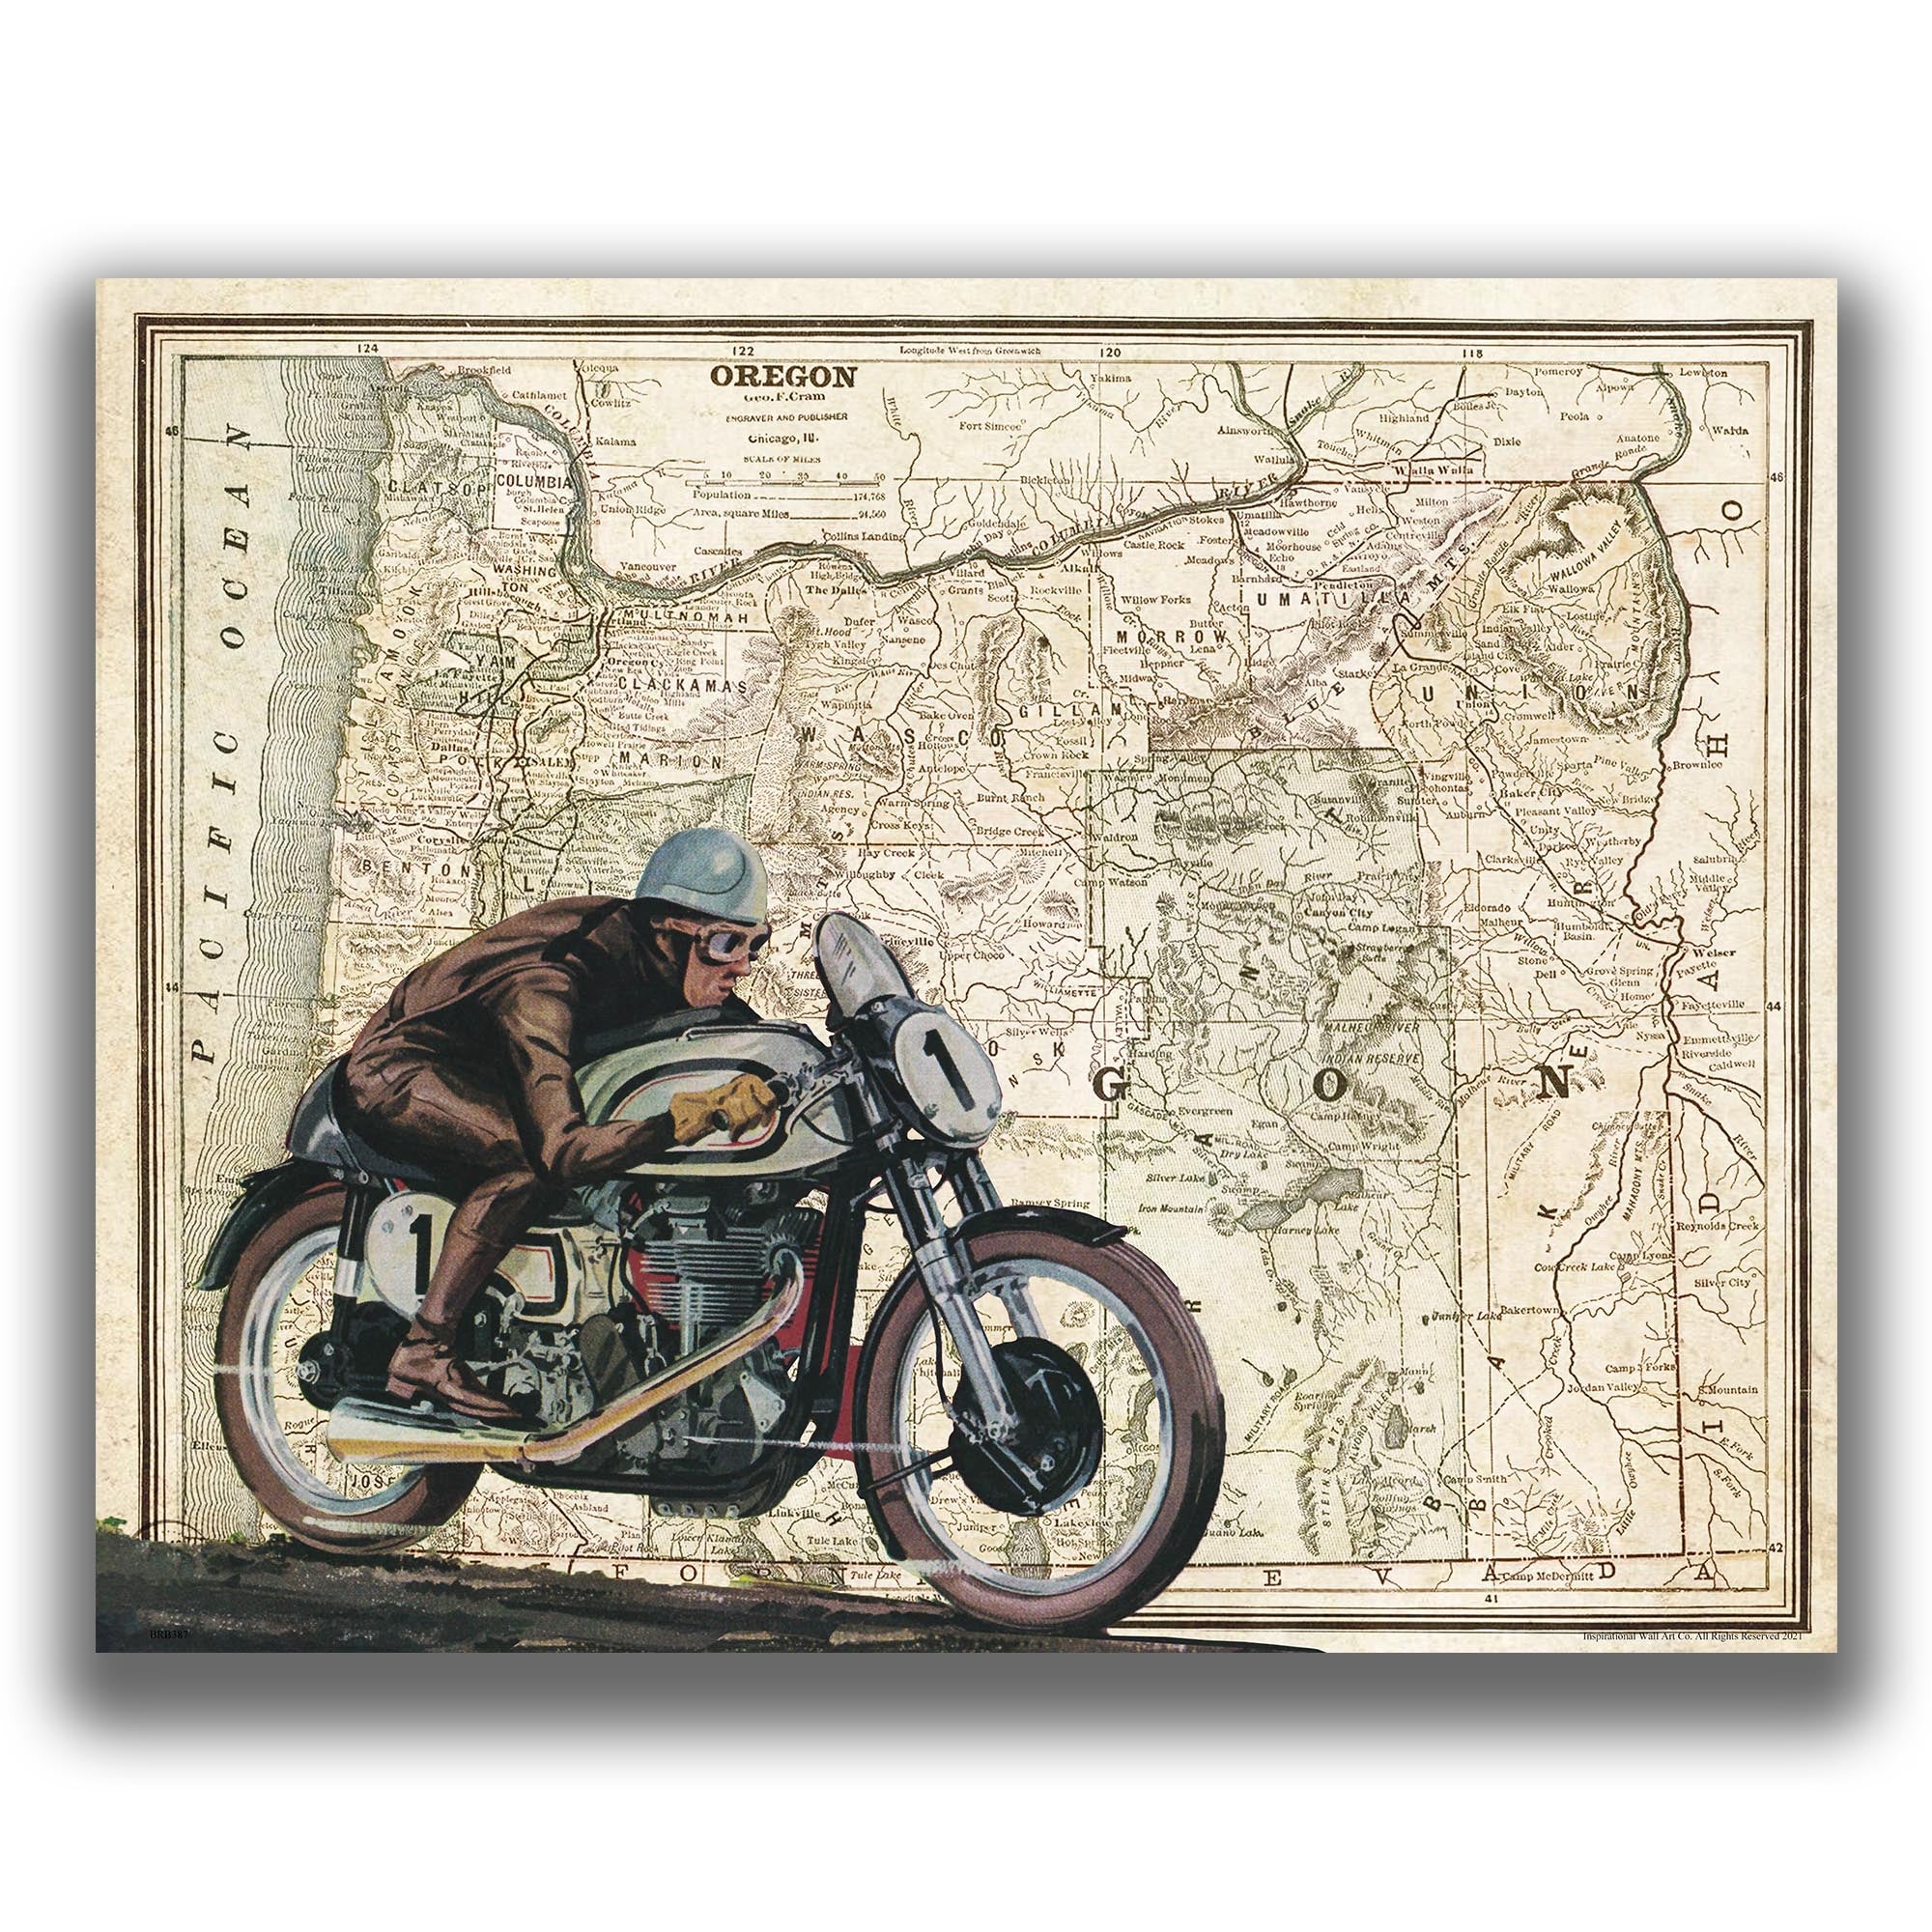 Oregon - Motorcycle Poster